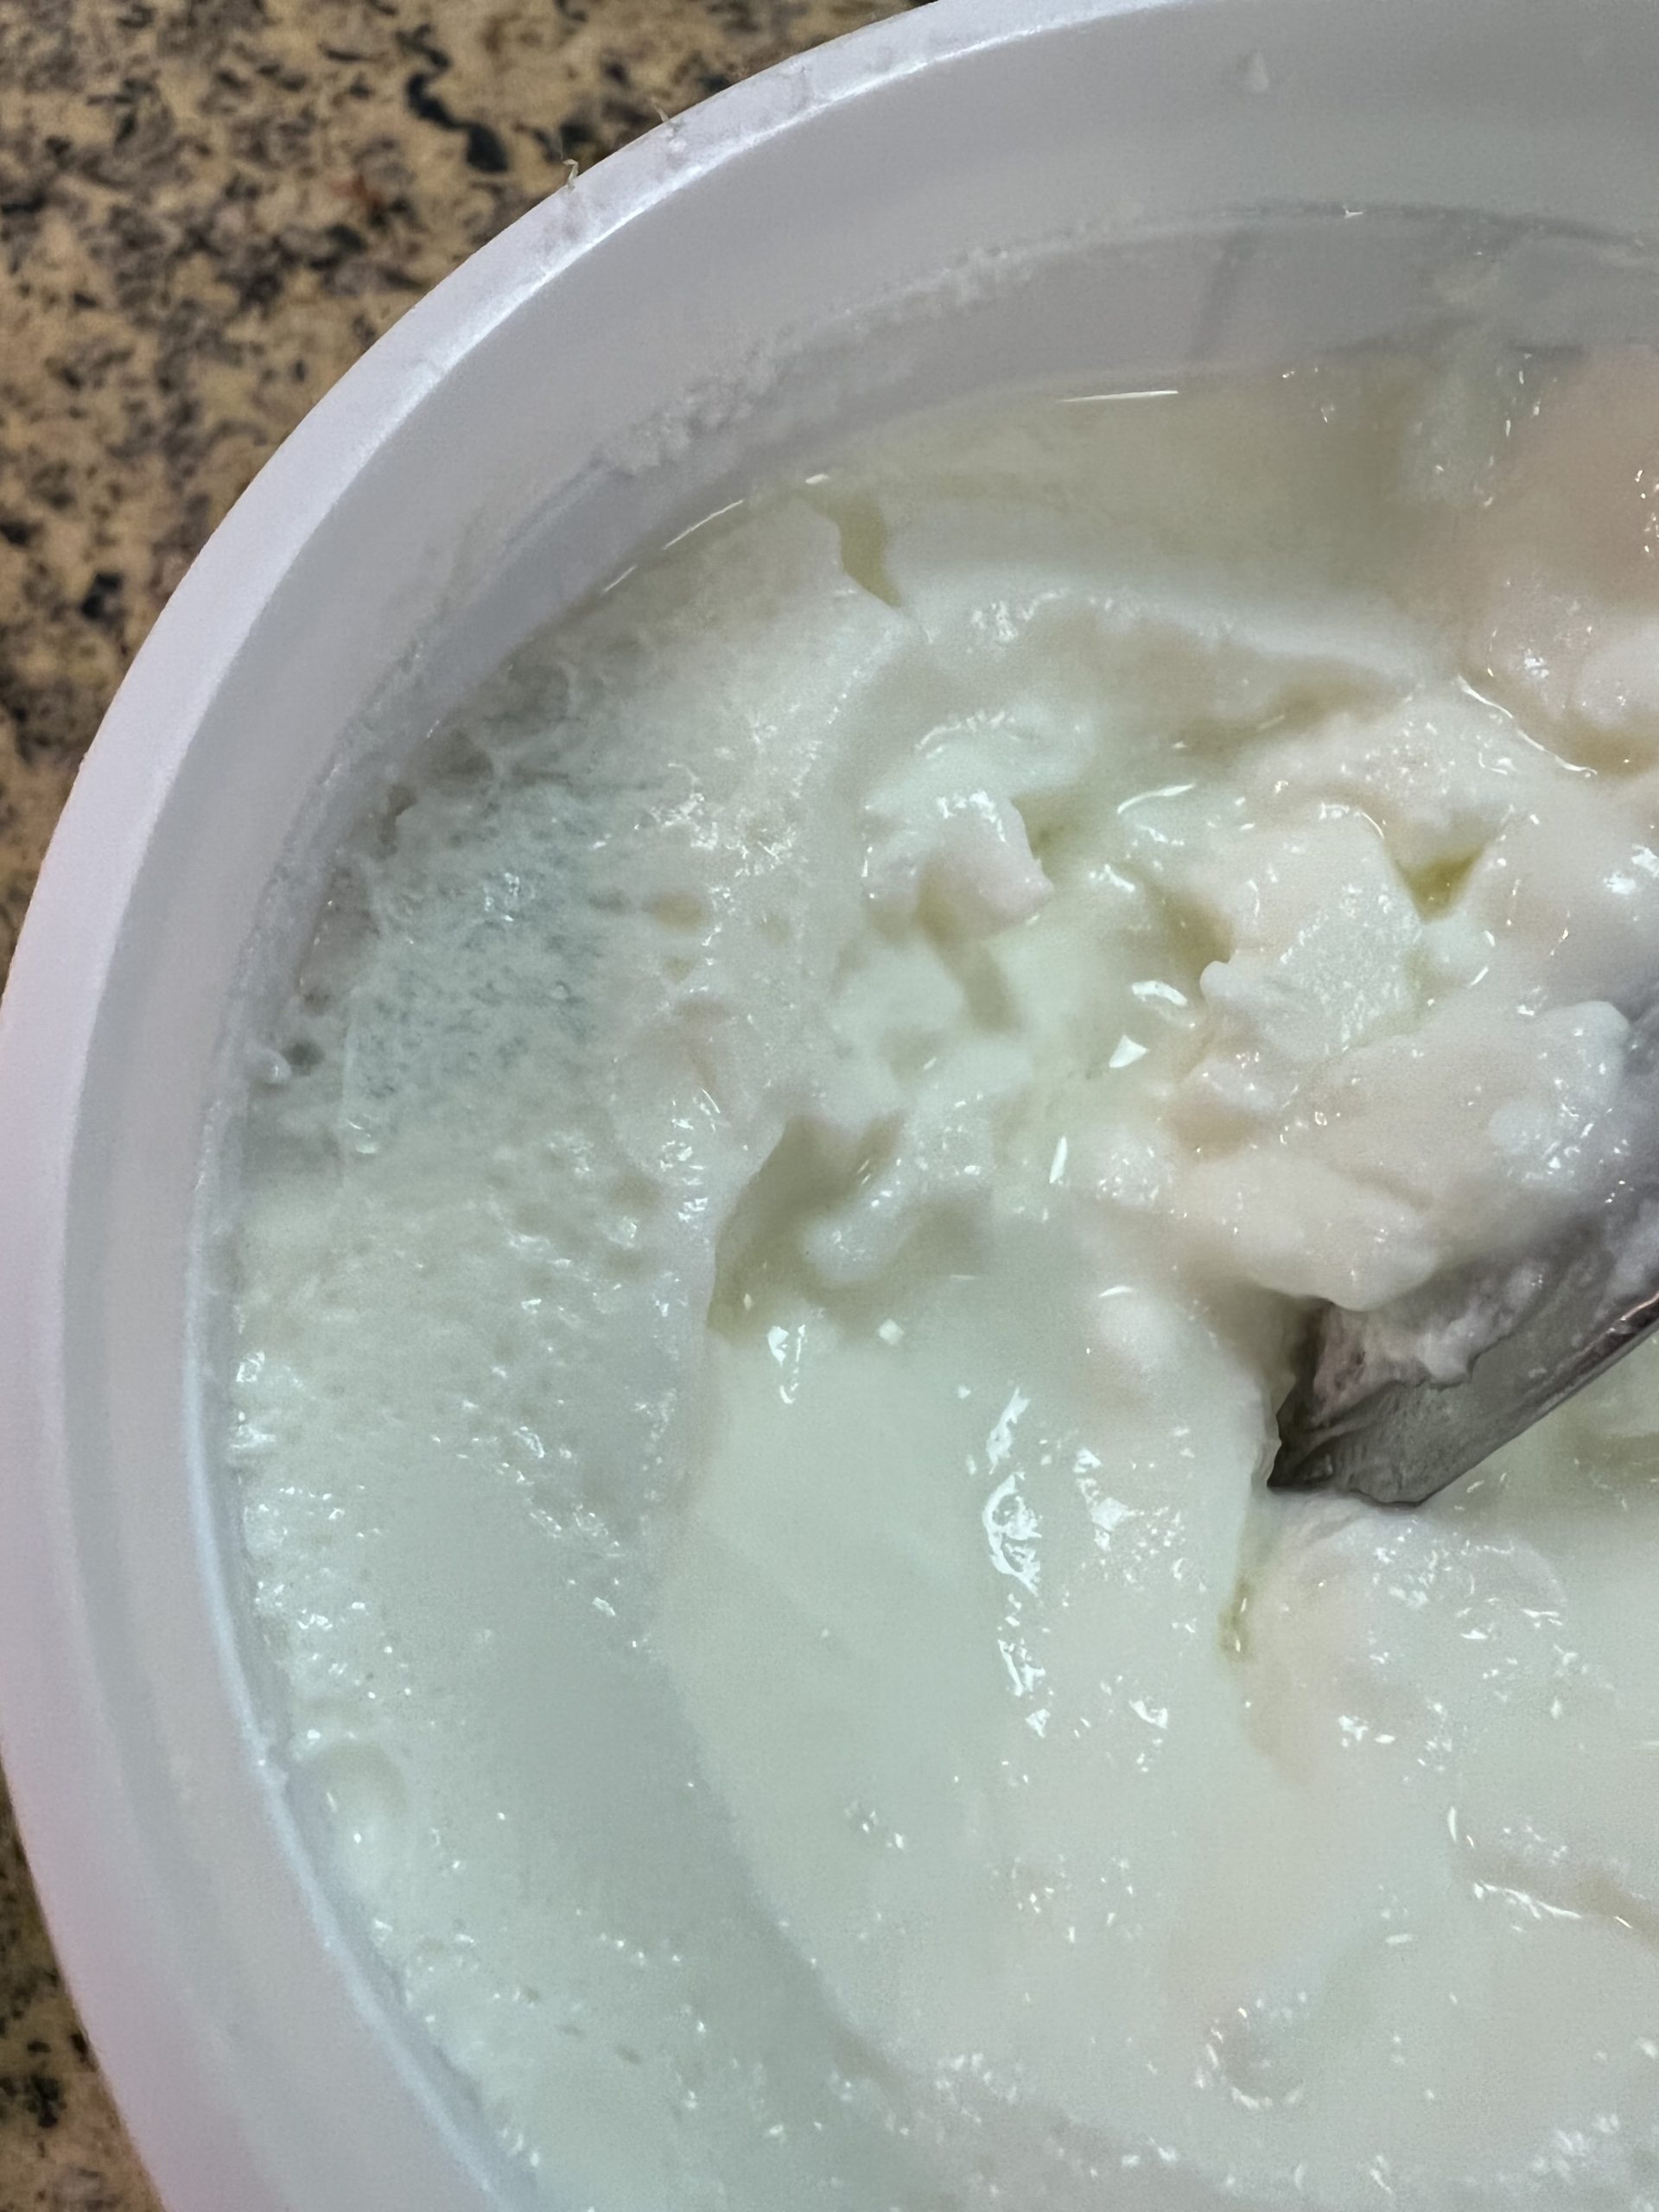 What does mold look like in yogurt?